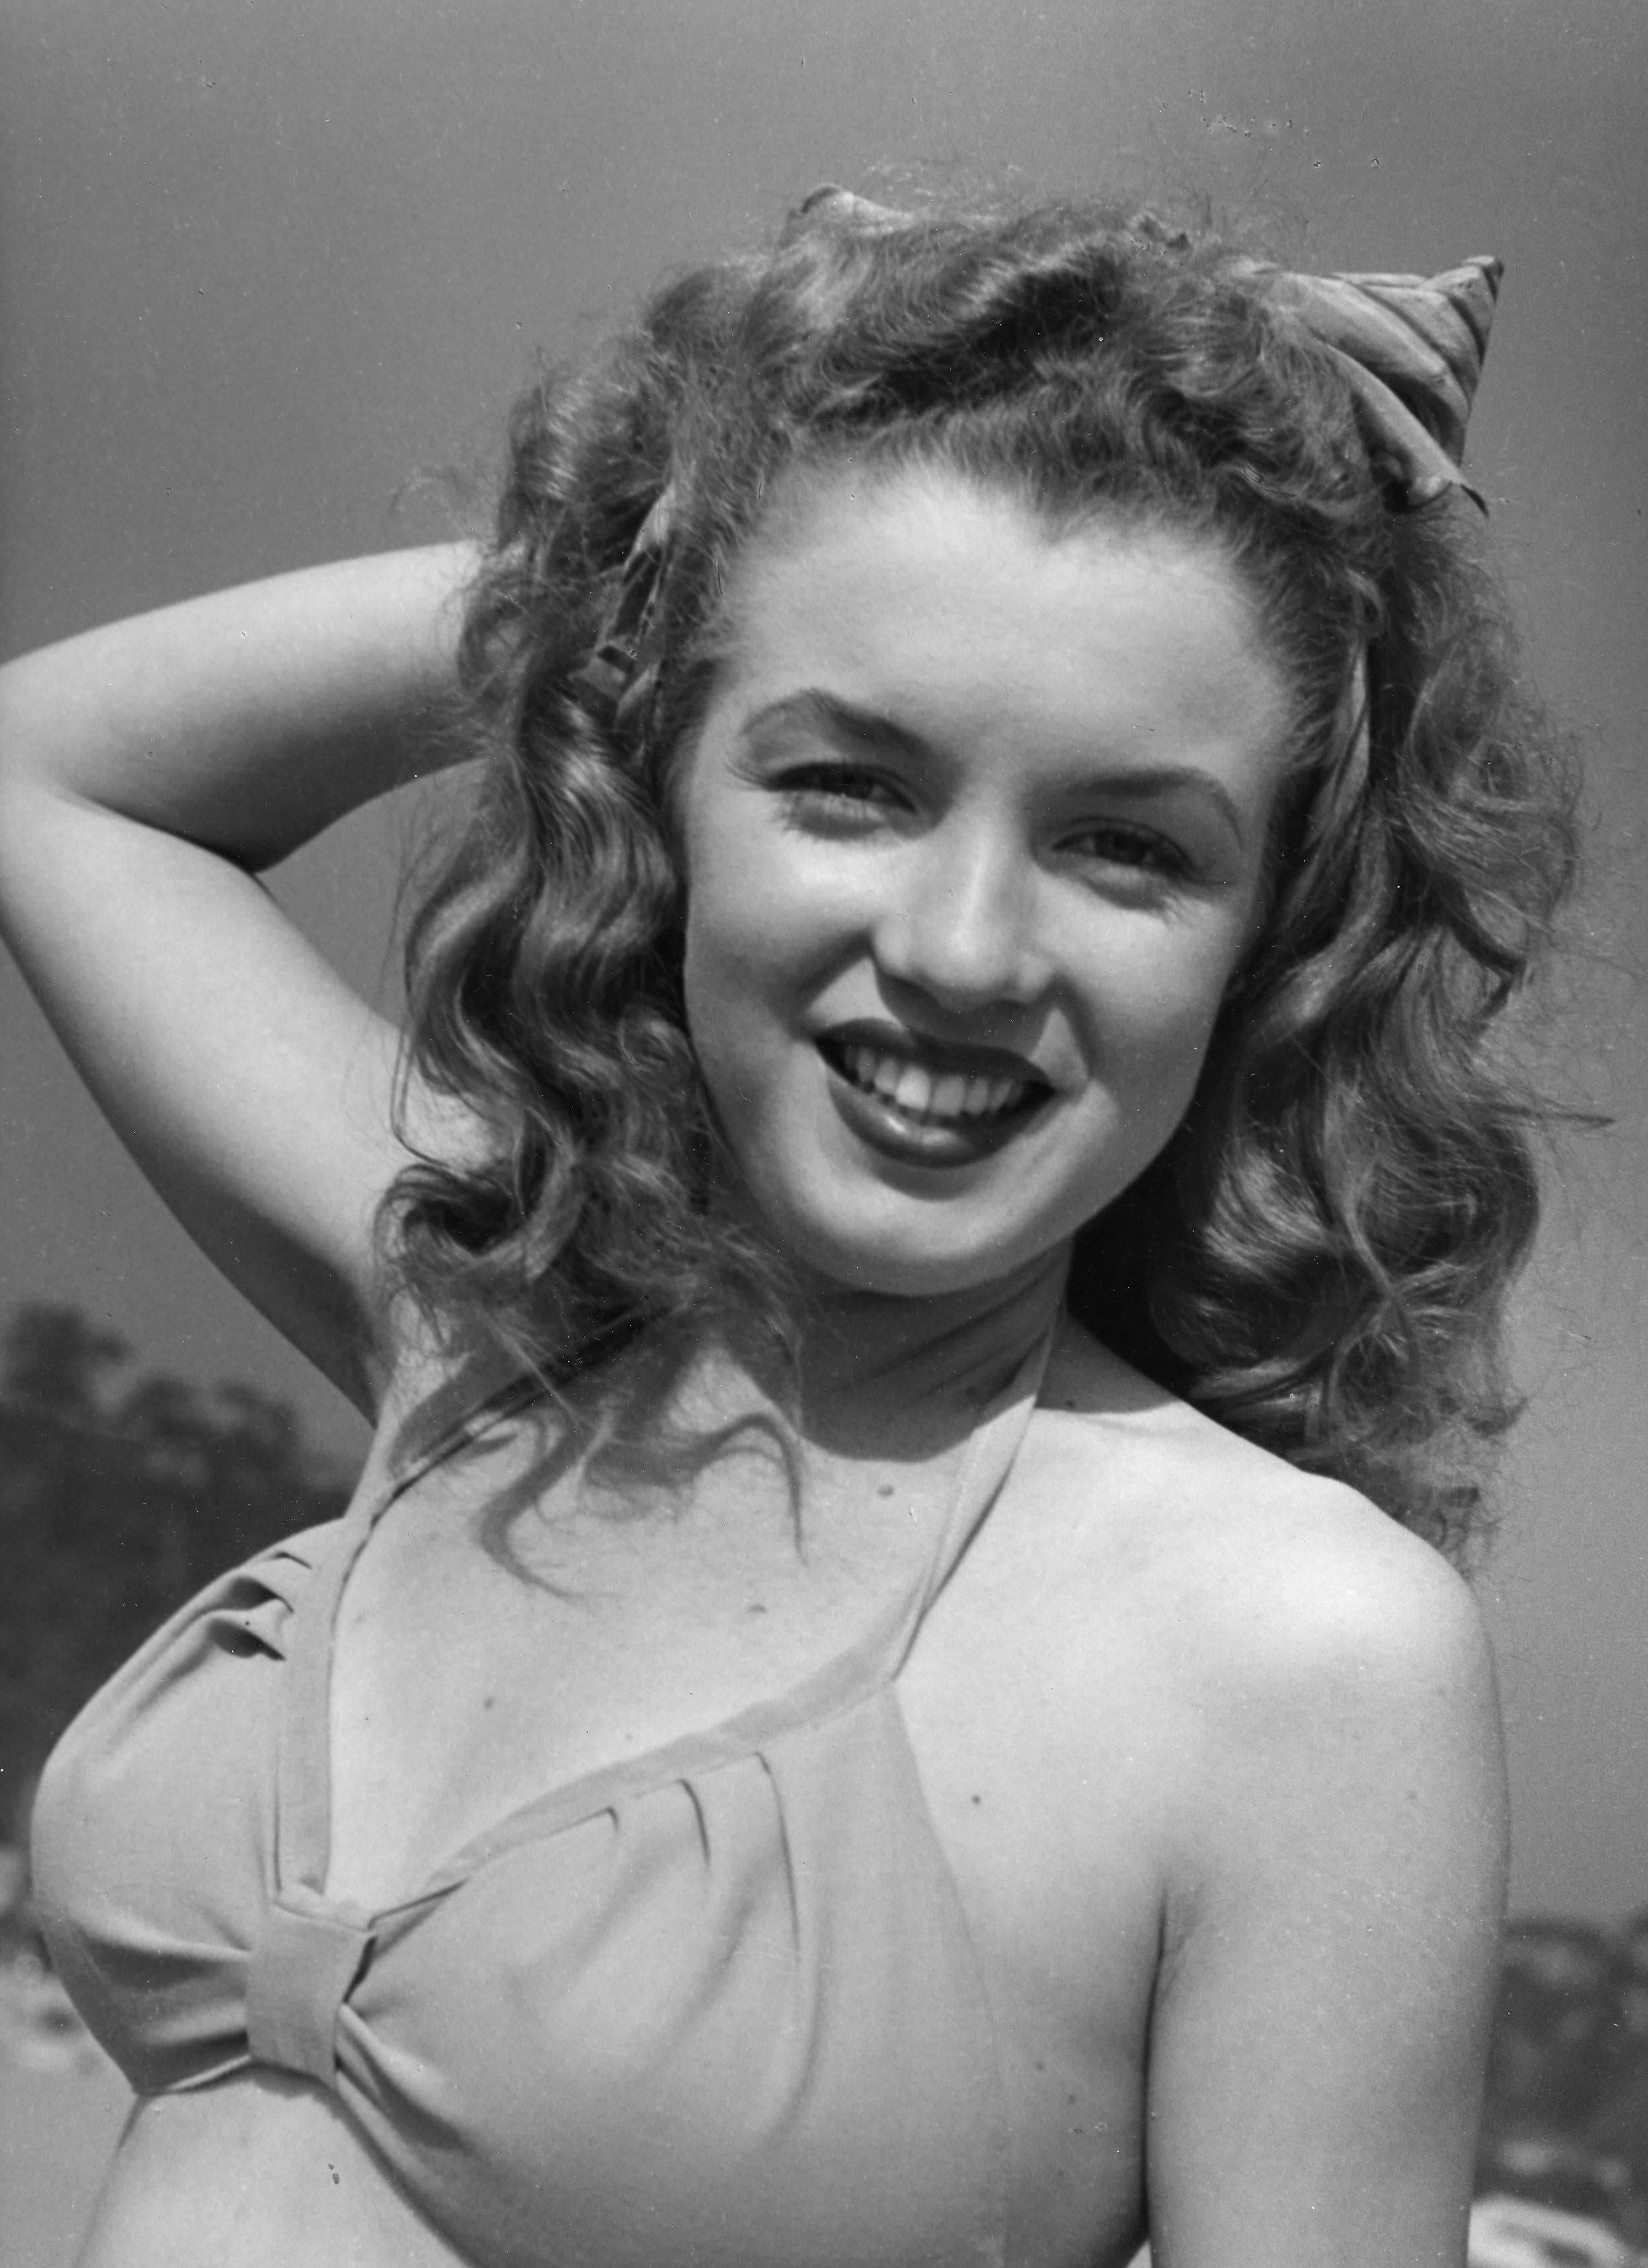 Andre de Dienes Portrait Photograph - Young Marilyn Monroe in the Sun Vintage Original Oversized Photograph